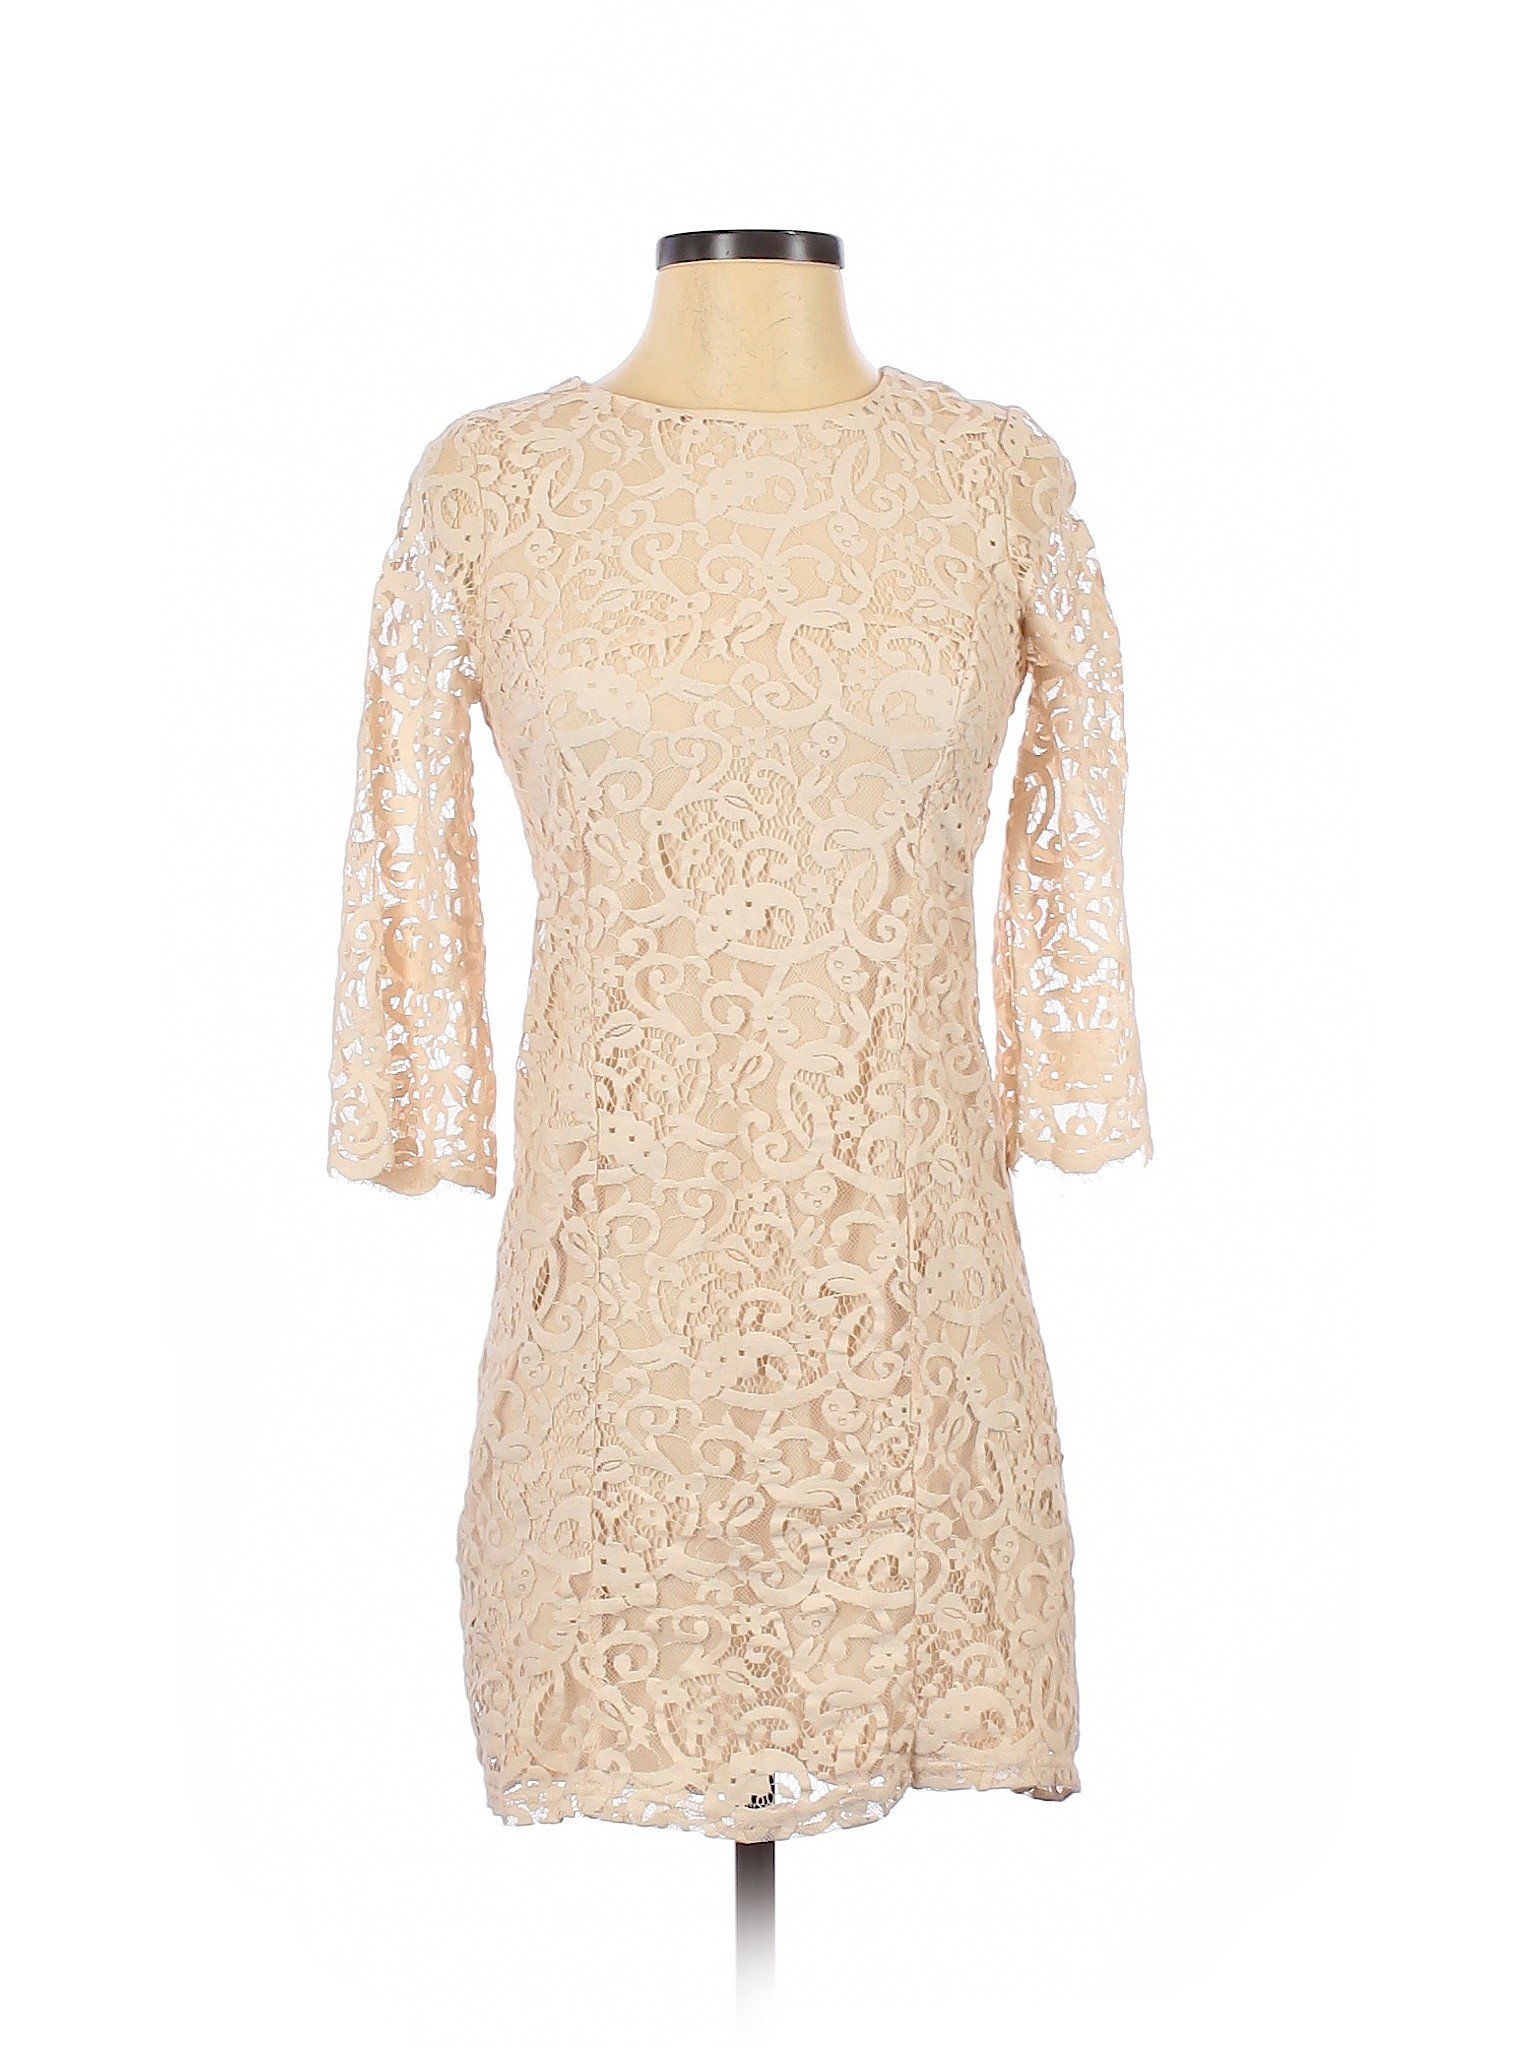 H&M Women Brown Cocktail Dress XS | eBay